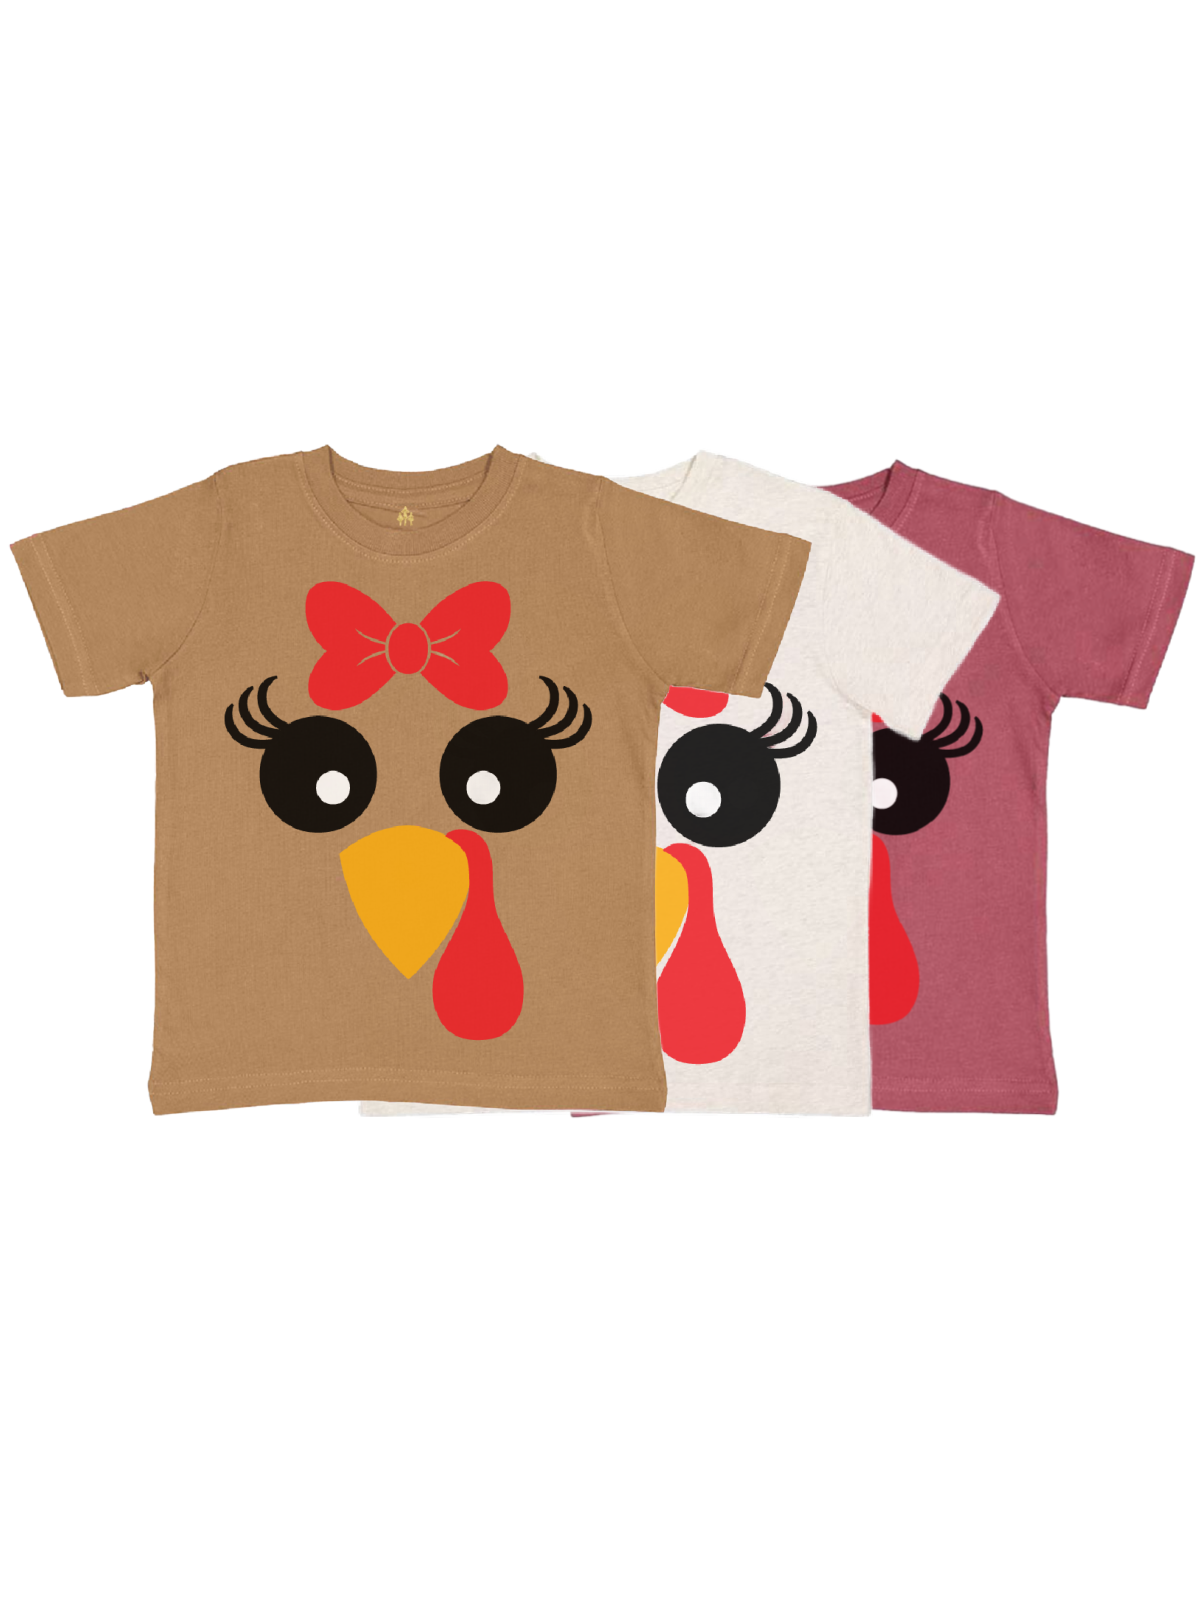 Girly Turkey Face Kids Thanksgiving Shirts